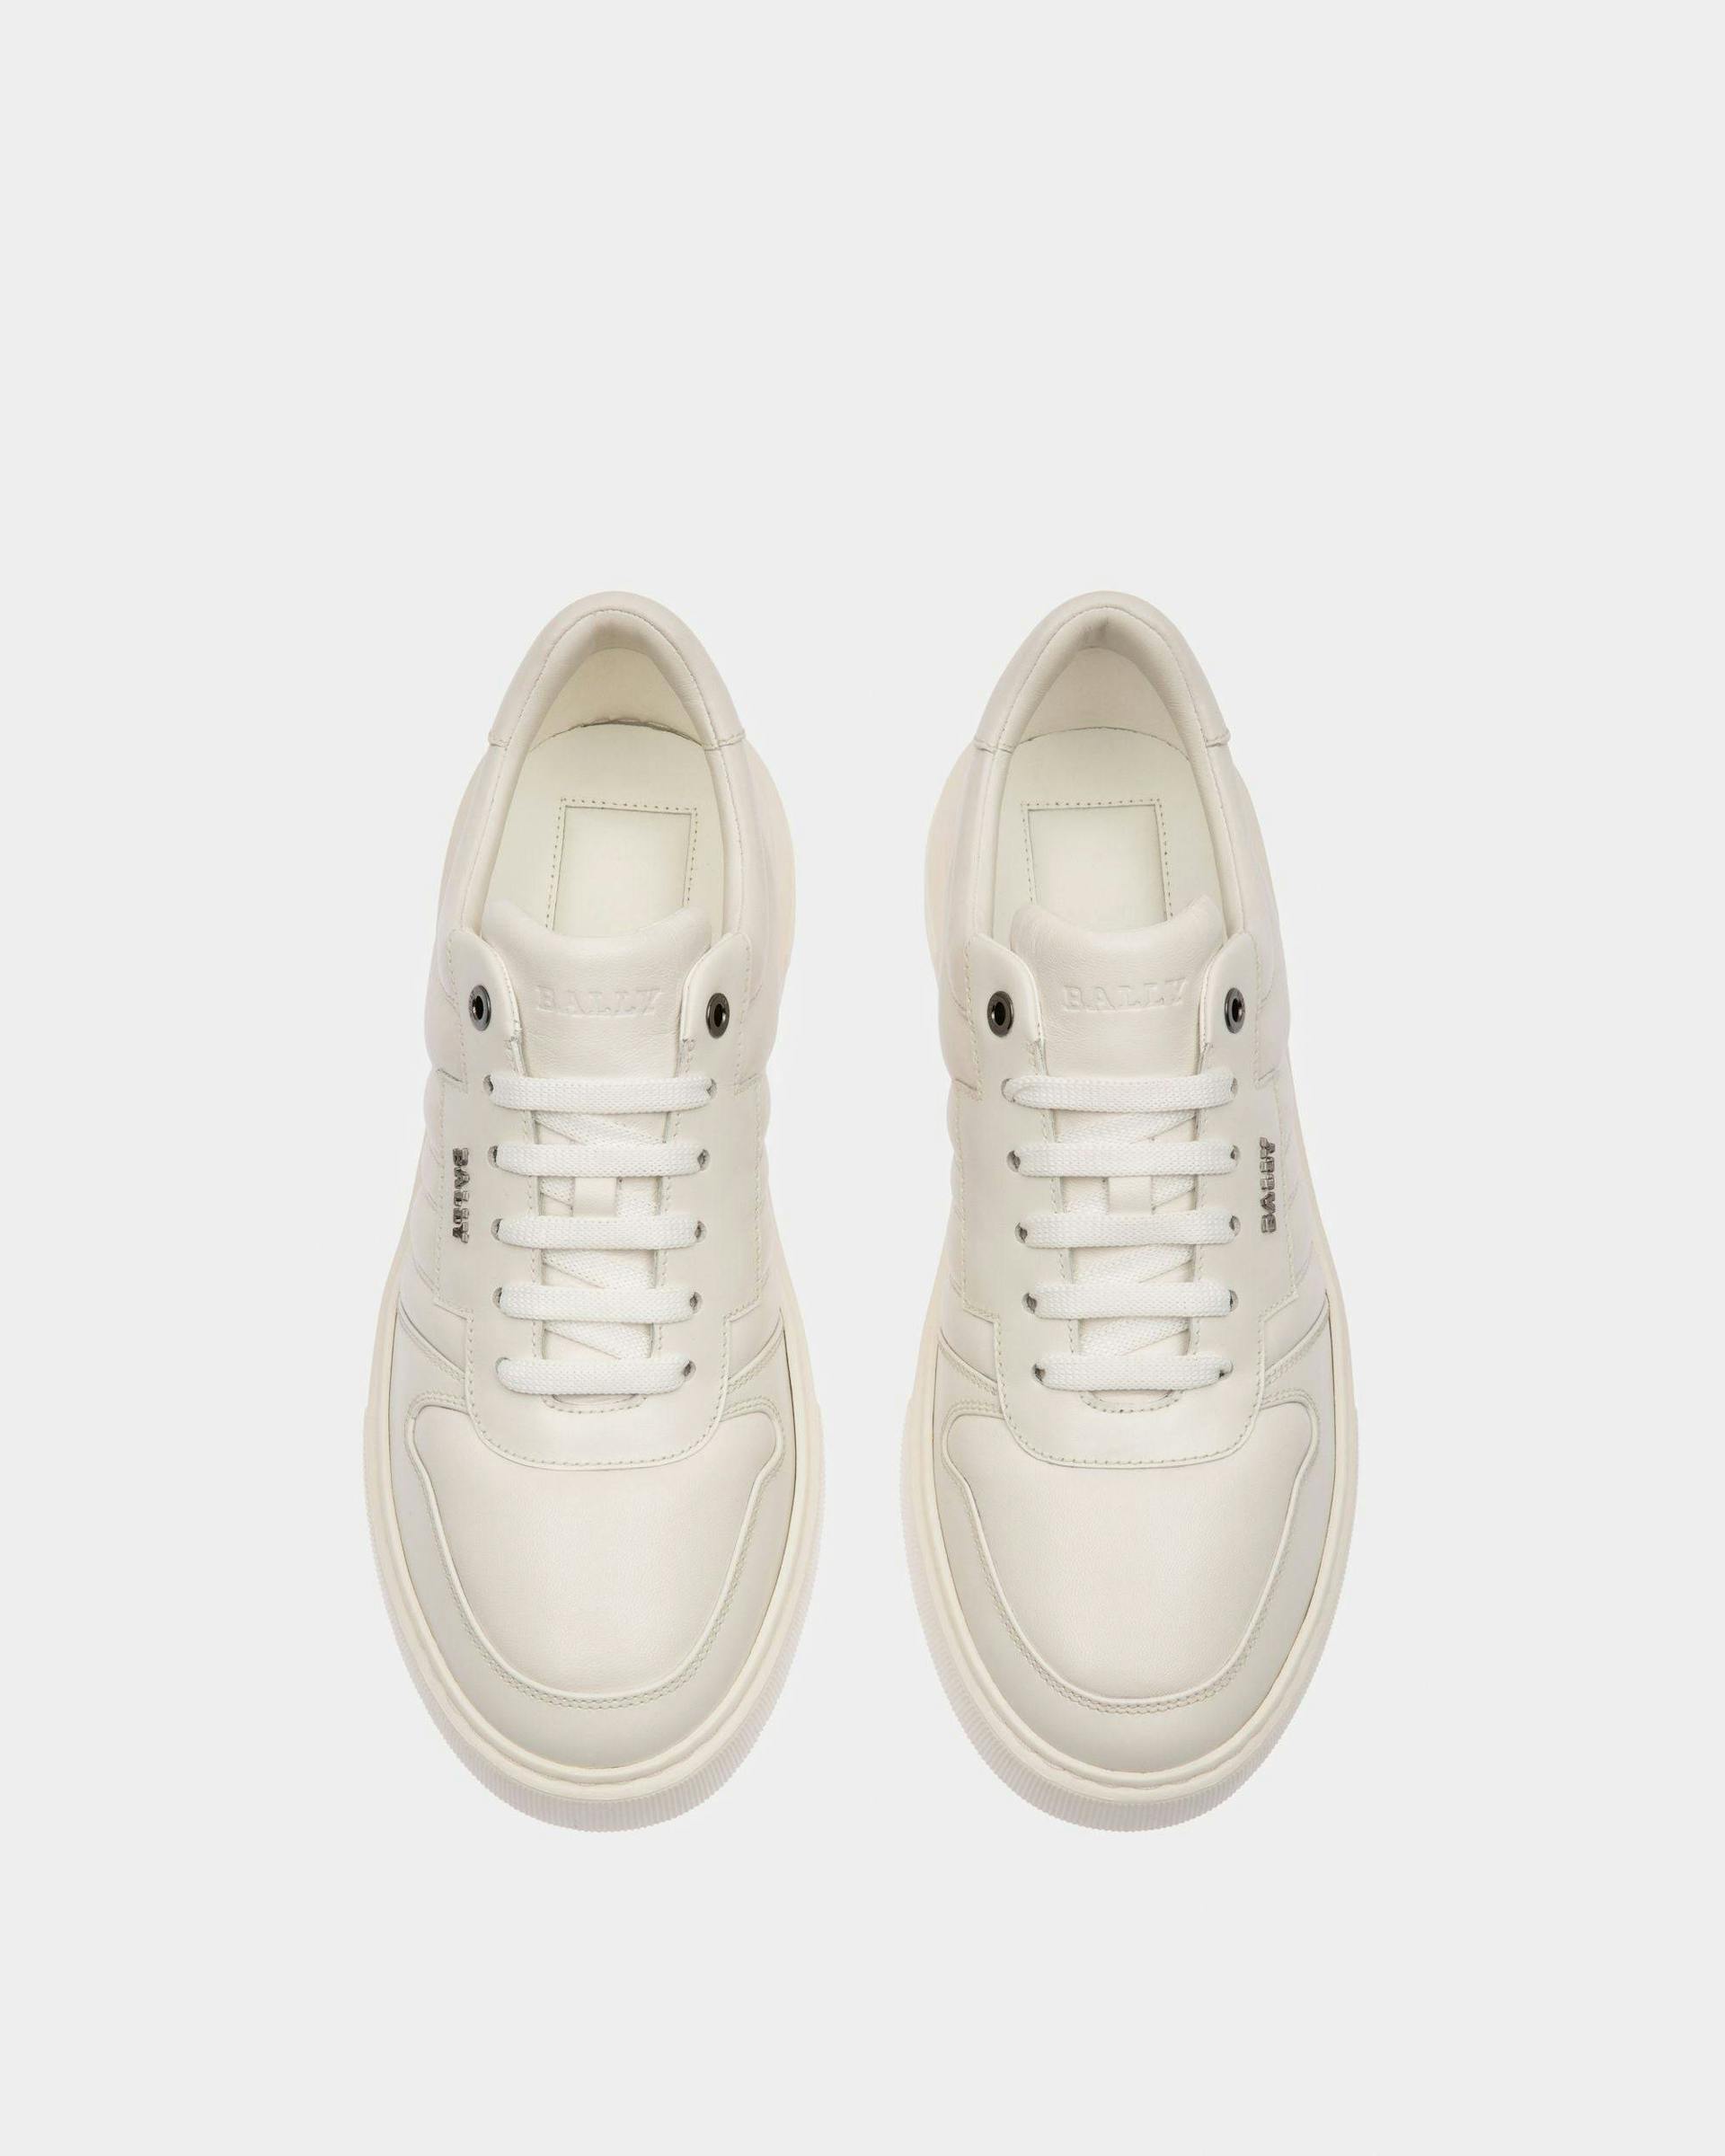 Maudo Leather Sneakers In White - Men's - Bally - 02